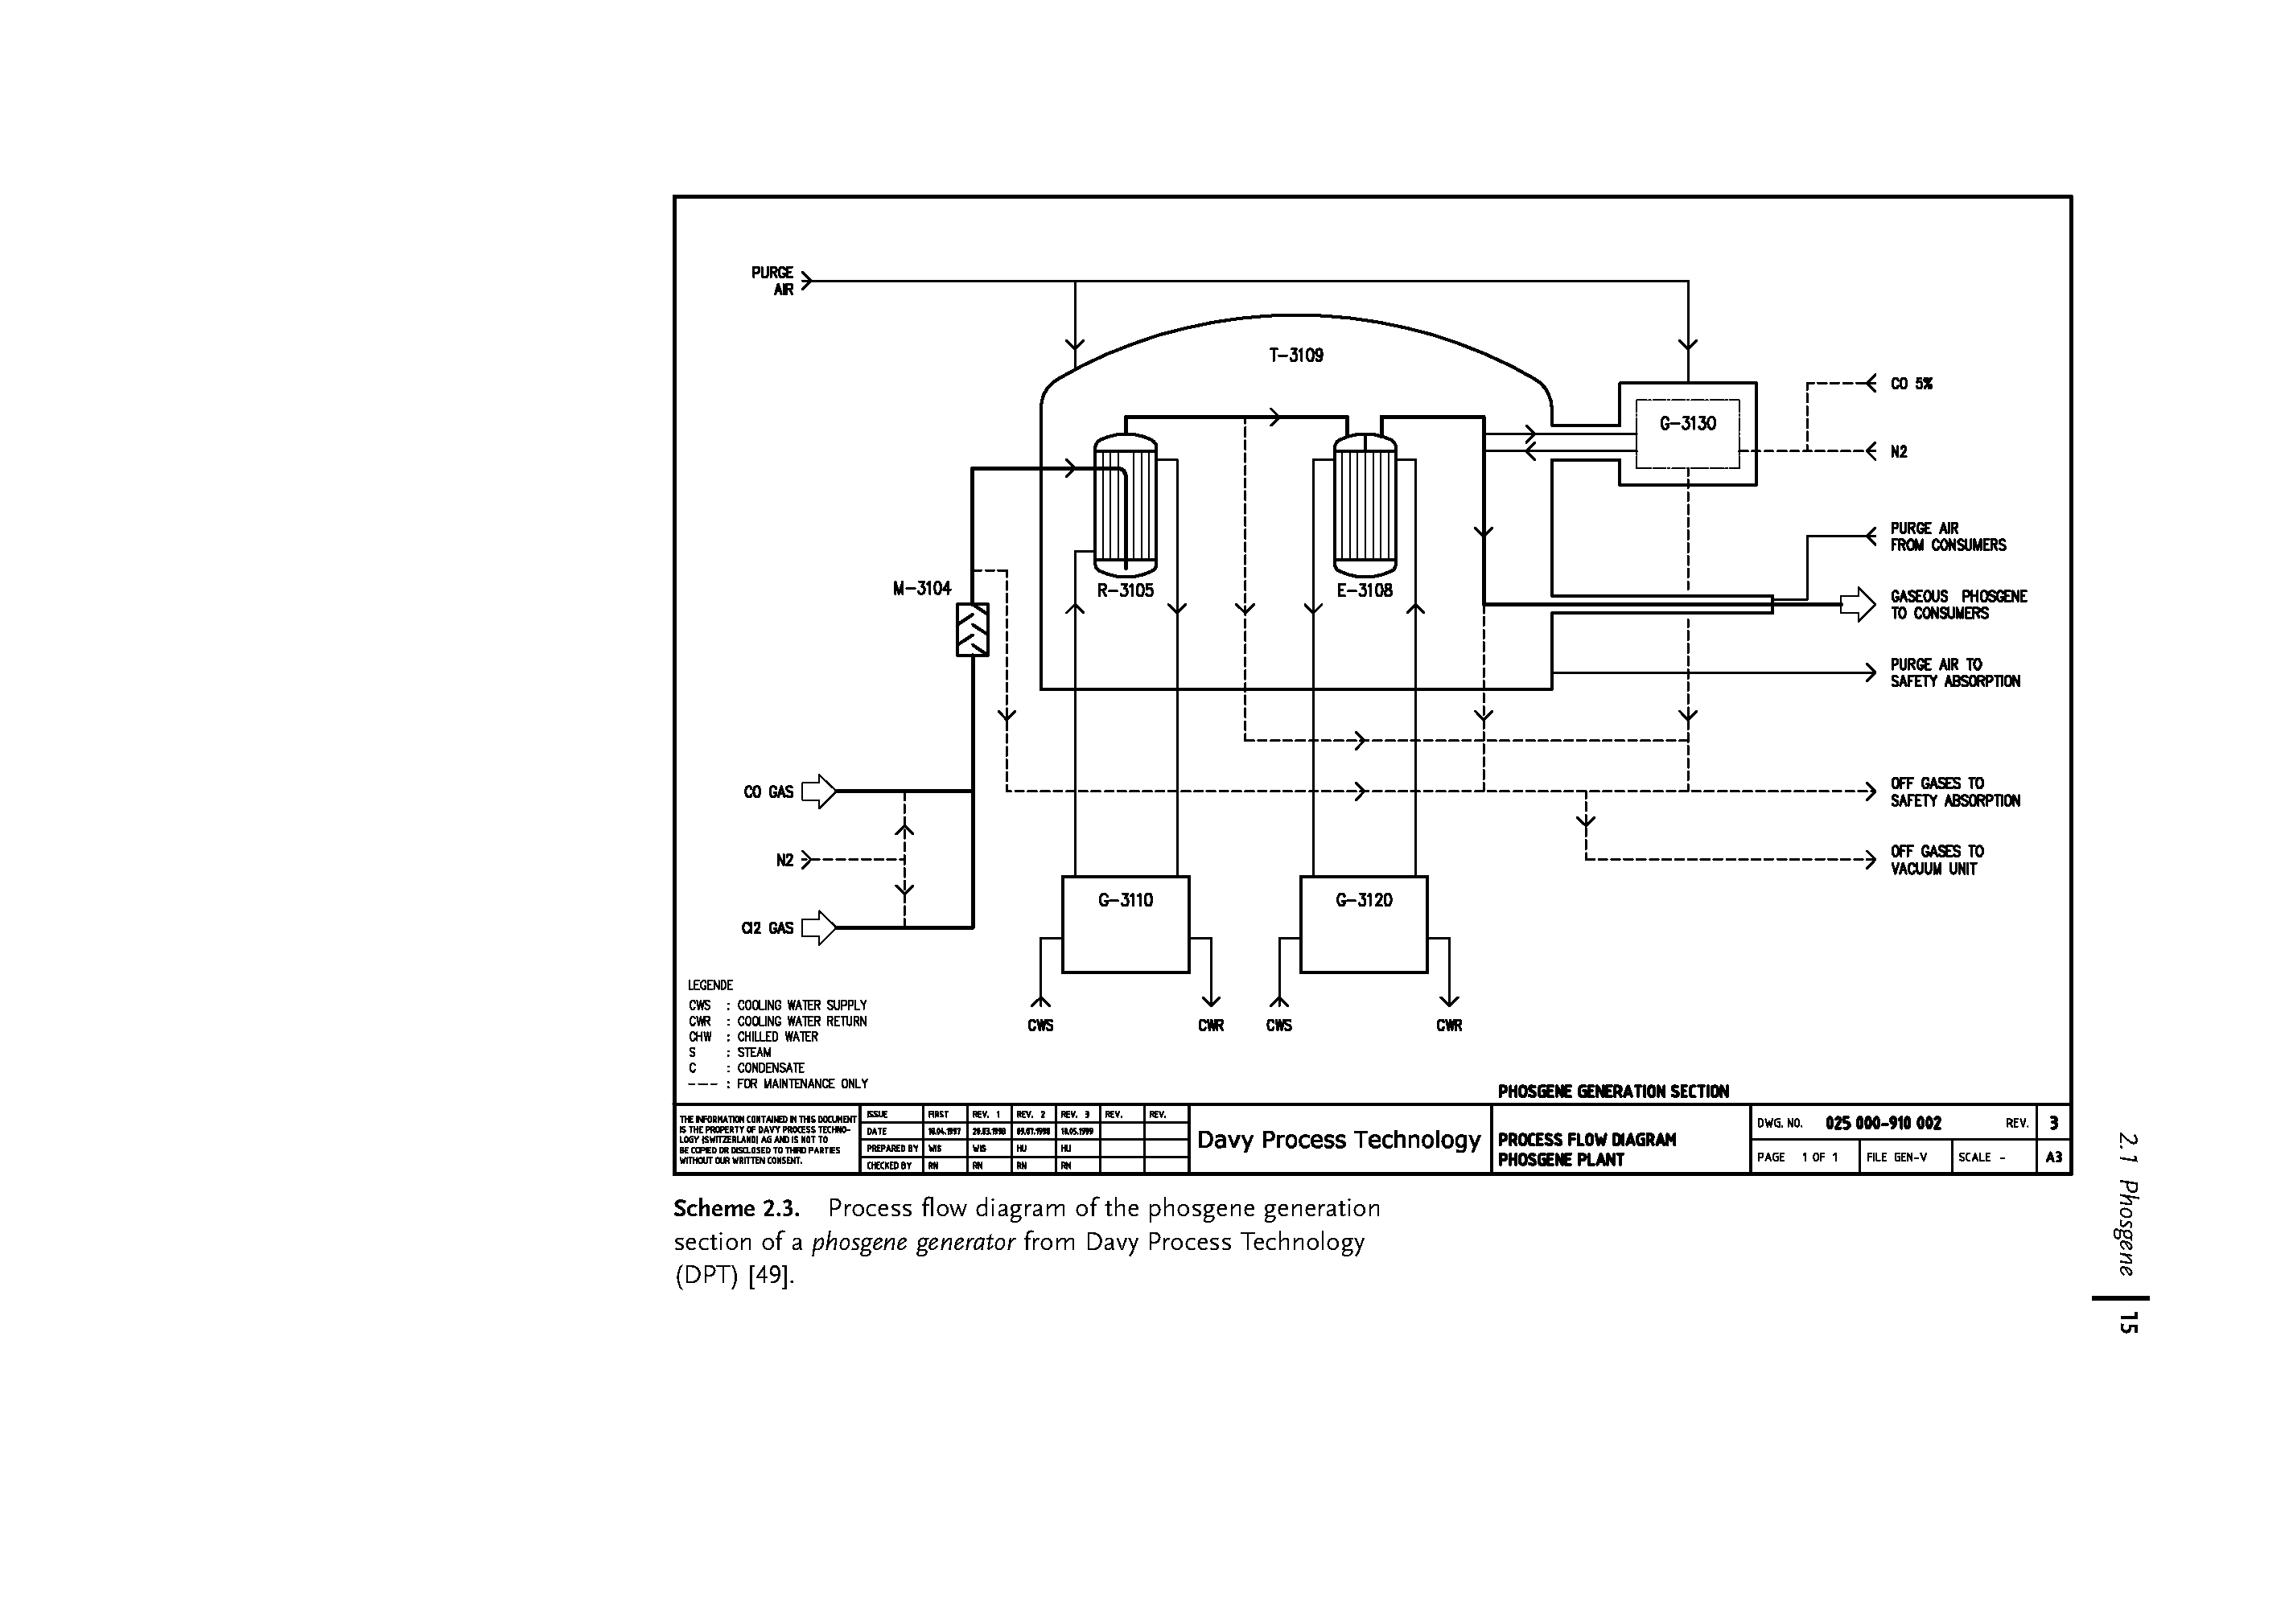 Scheme 2.3. Process flow diagram of the phosgene generation section of a phosgene generator from Davy Process Technology (DPT) [49],...